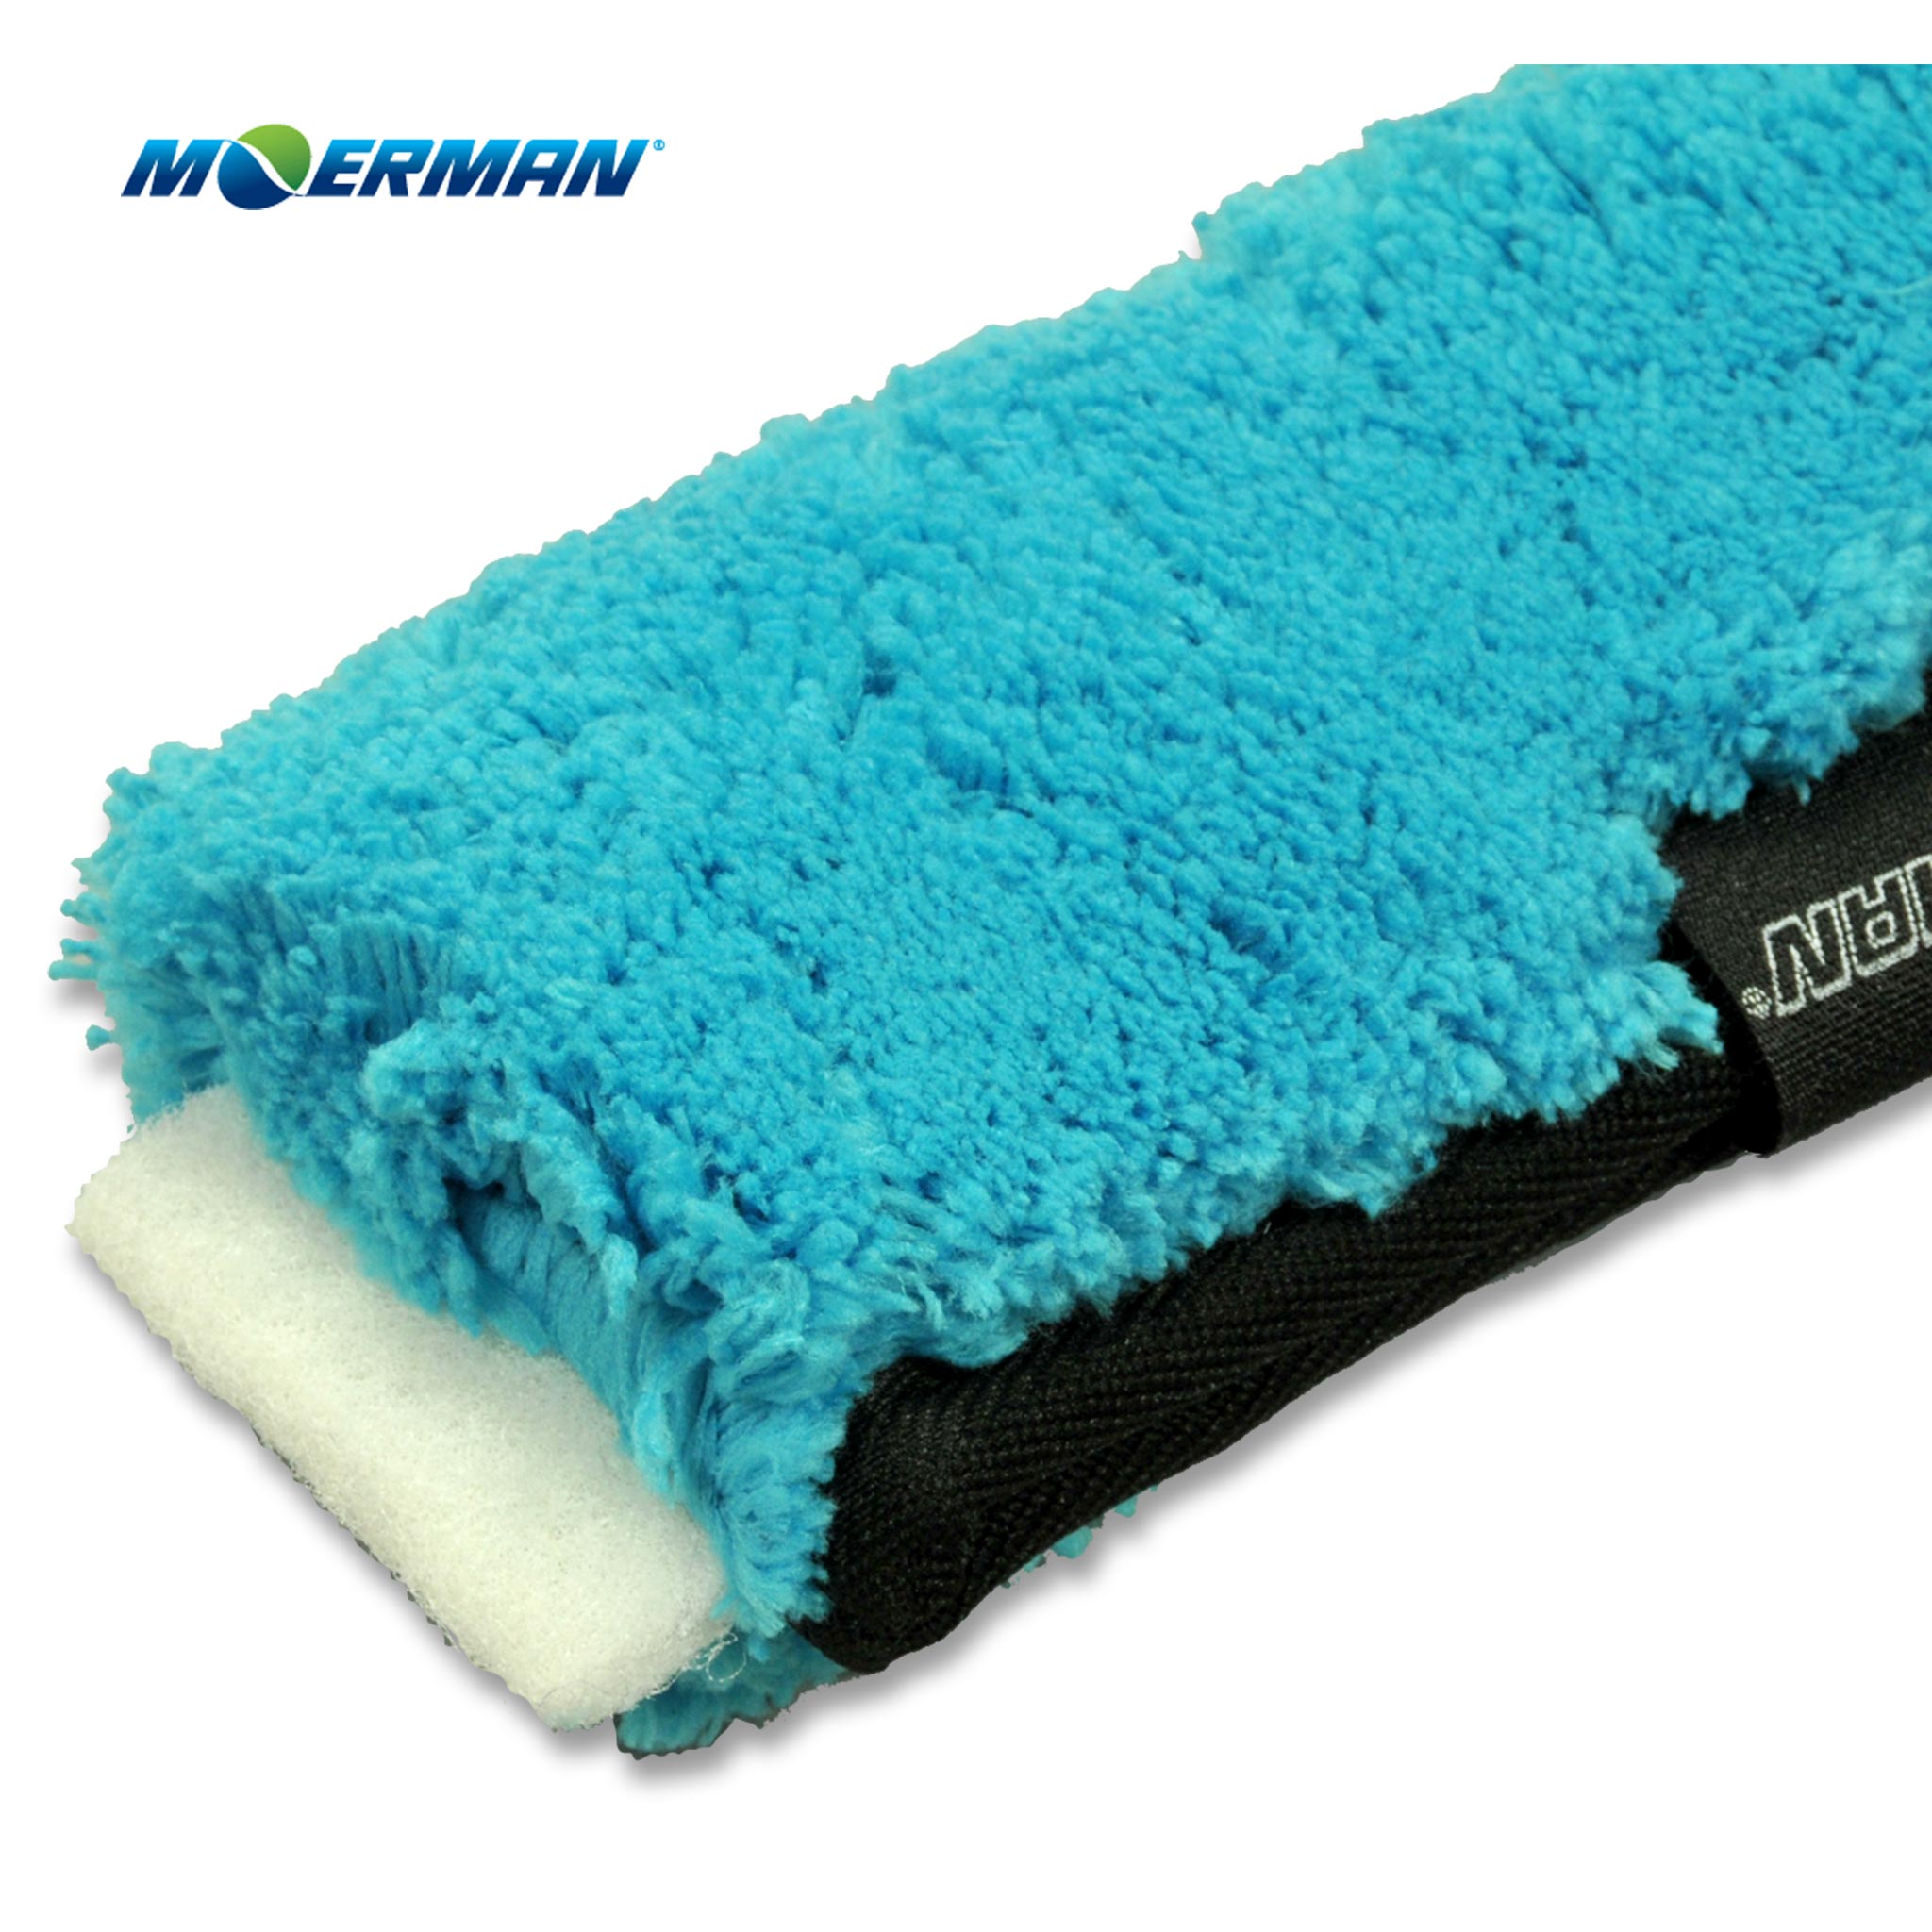 Moerman Microfibre Washer Sleeve